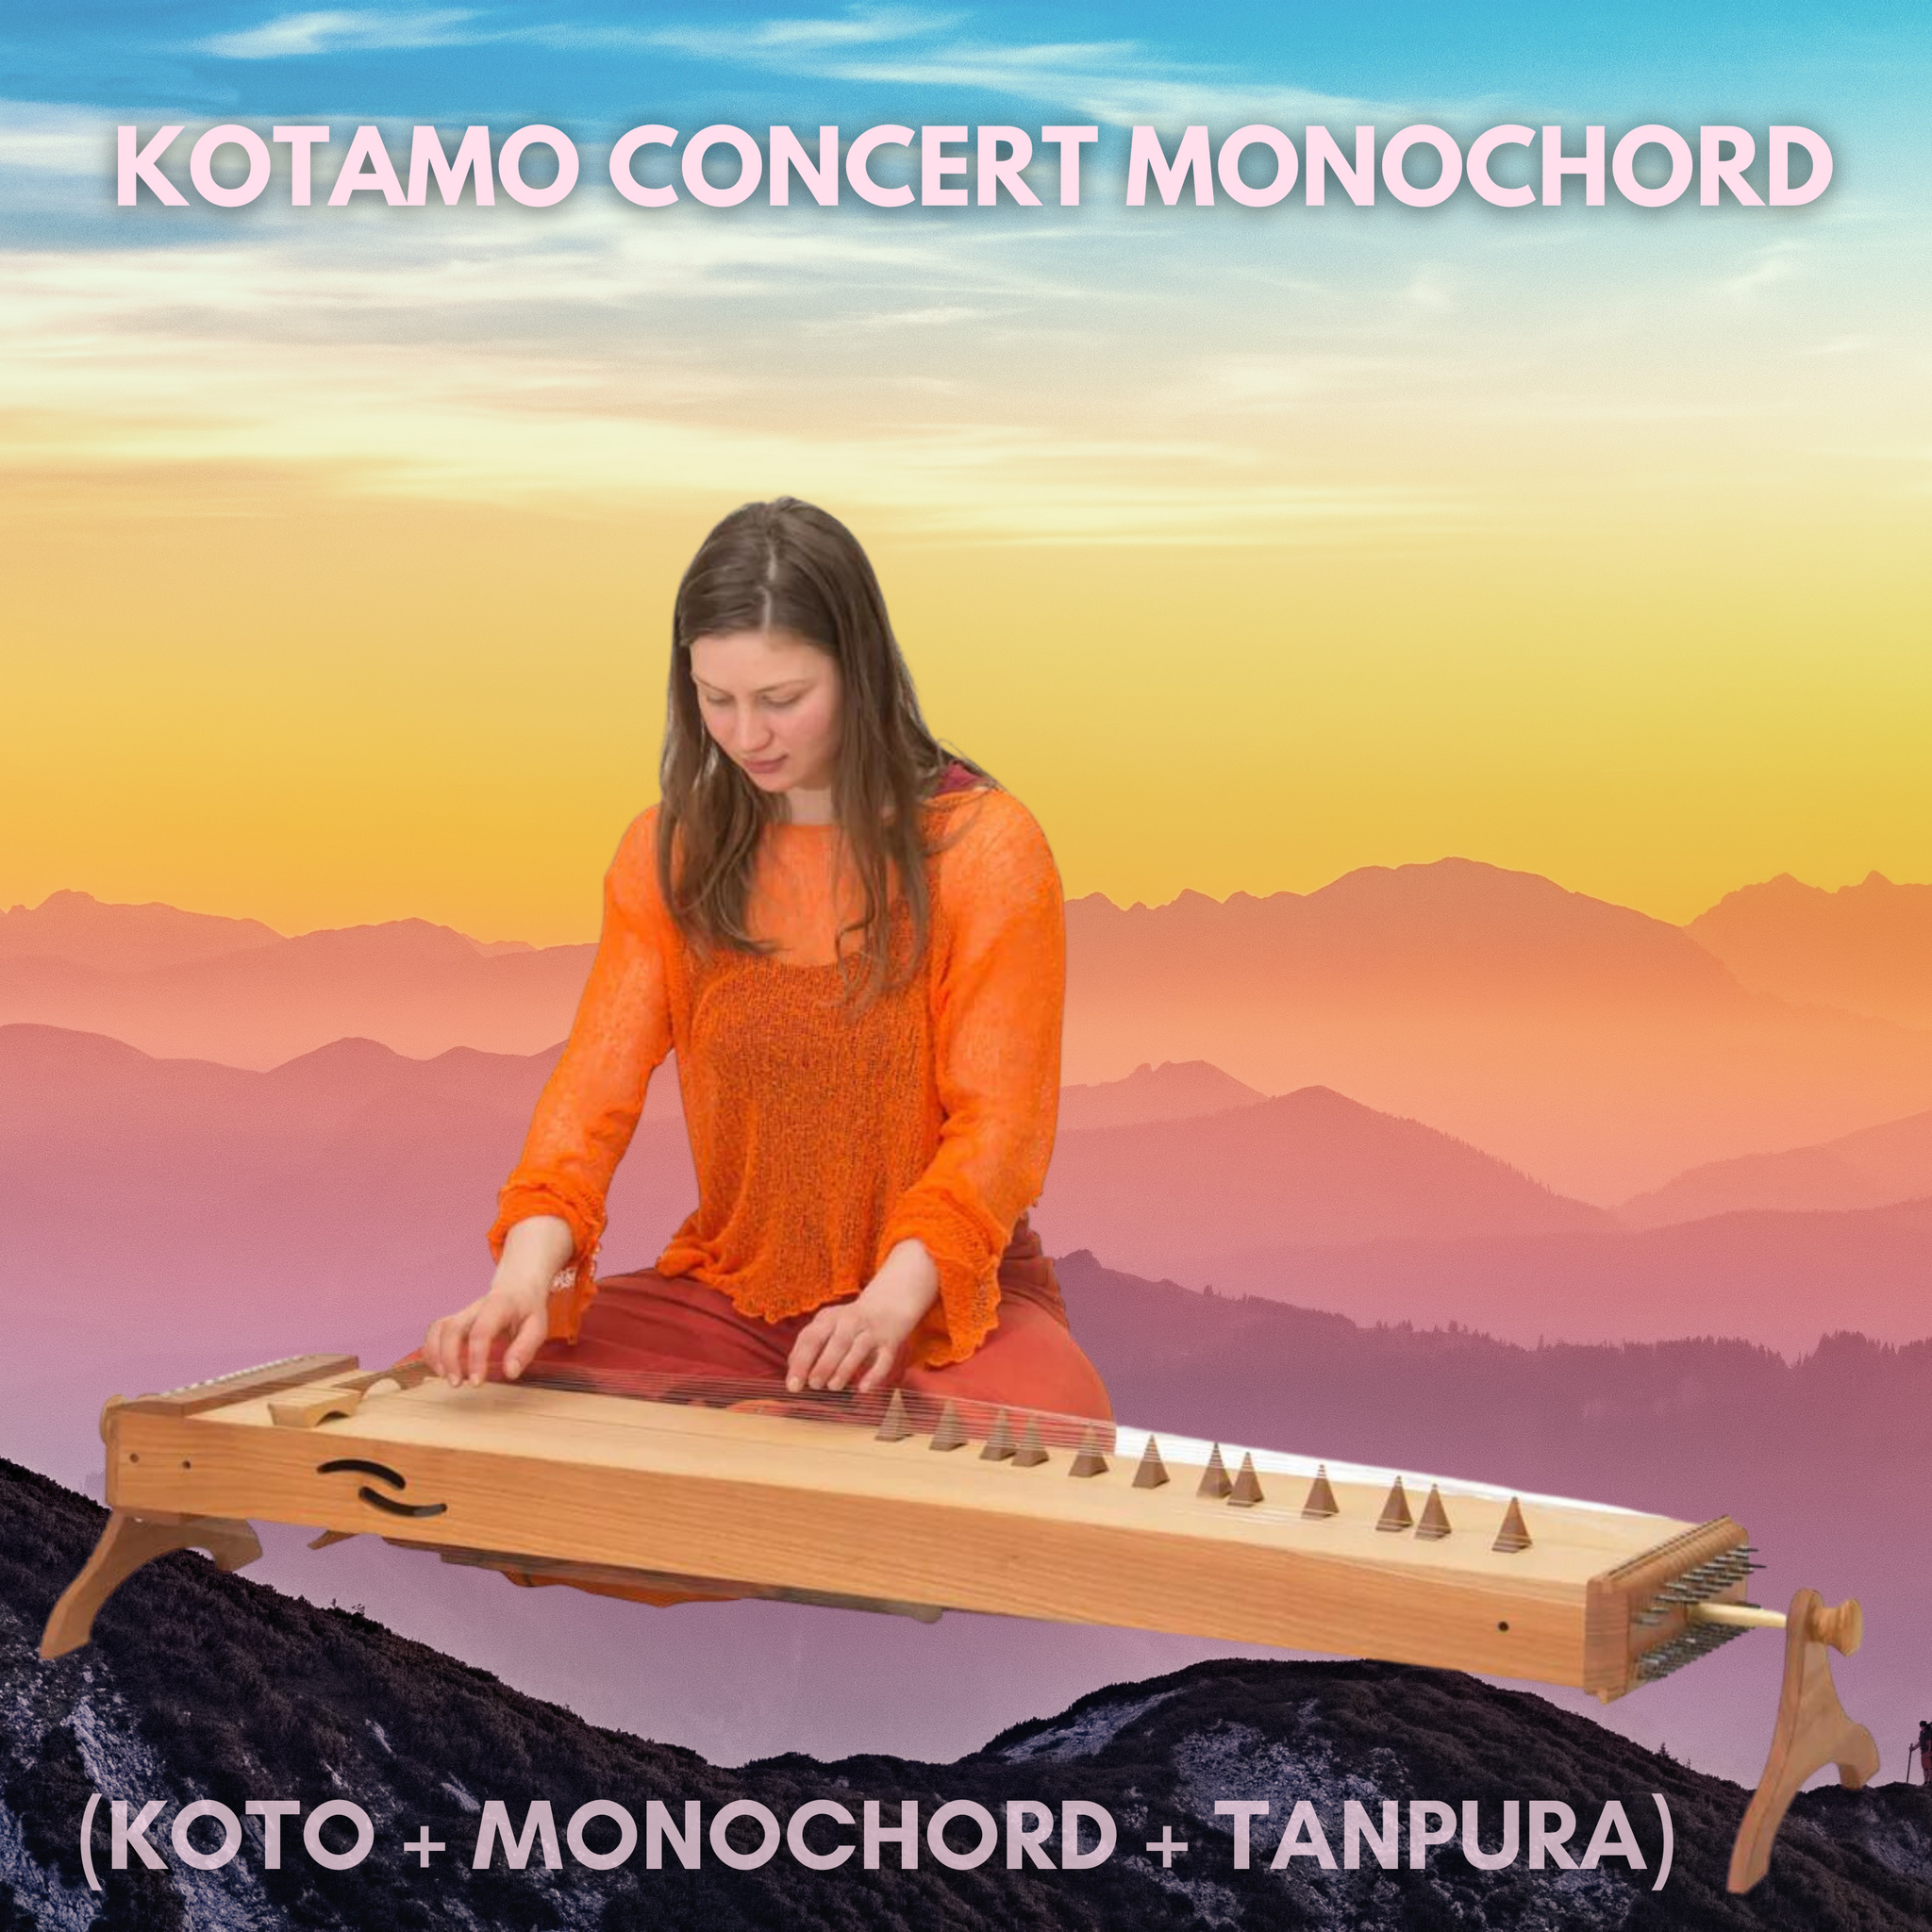 KoTaMo Concert Monochord: Koto, Tanpura, Monochord in One!